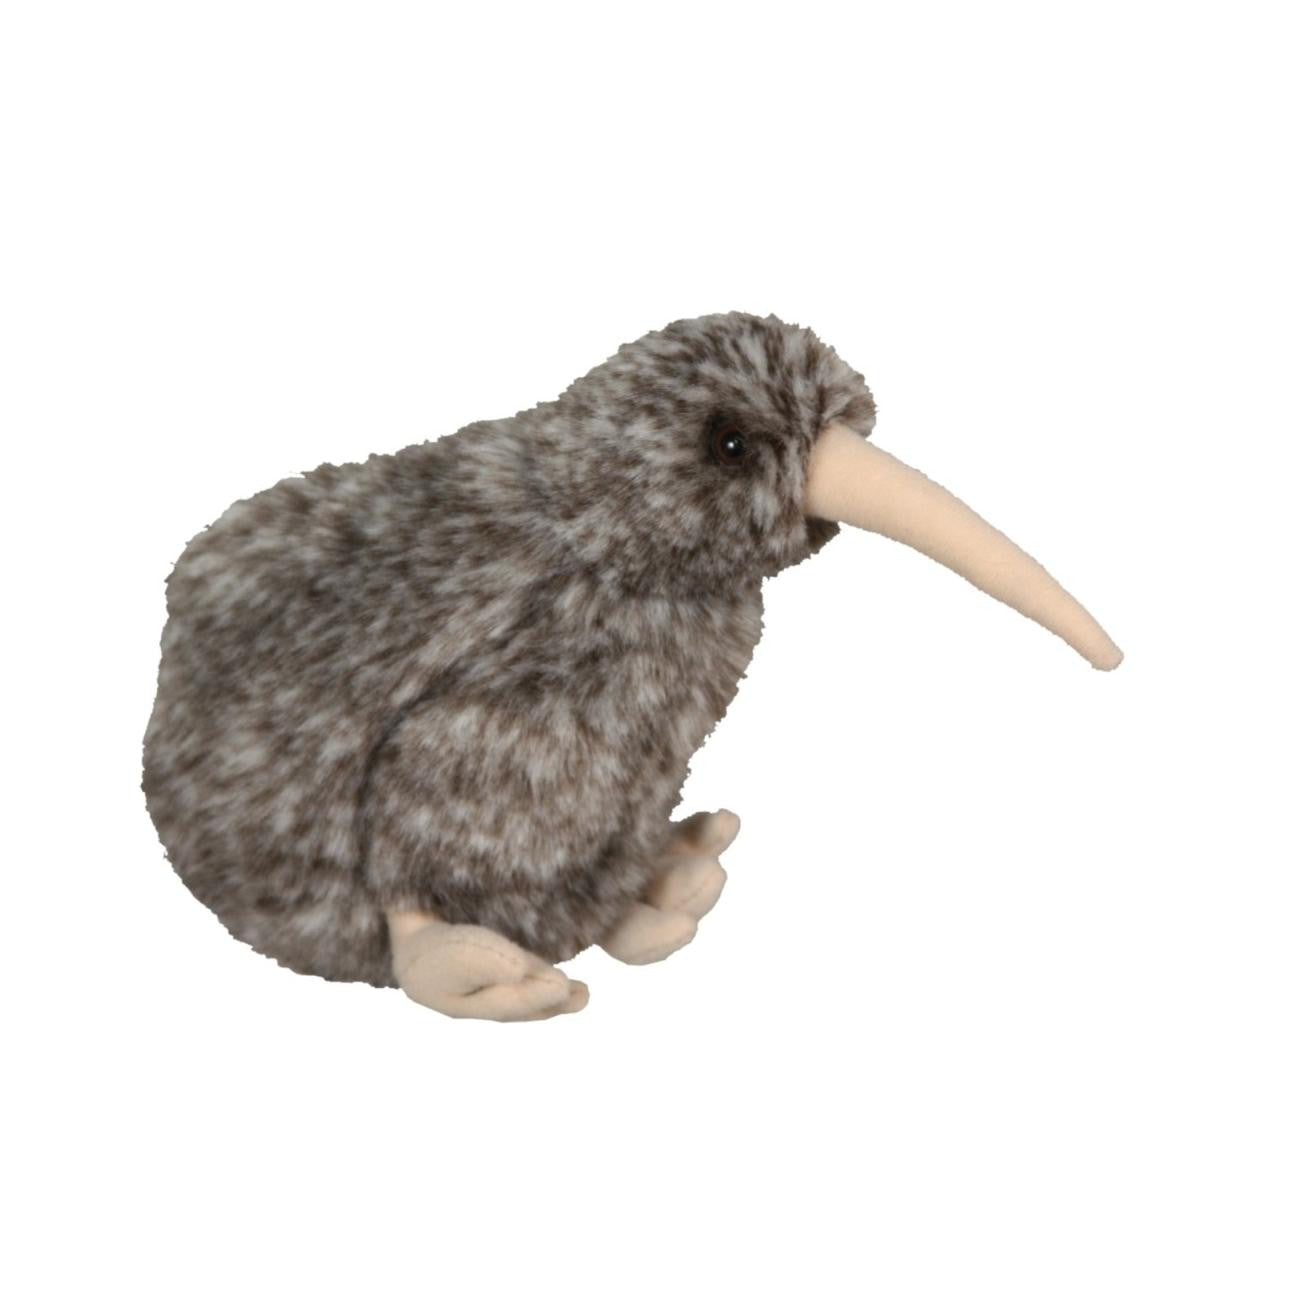 Spotted Kiwi Soft Toy 15cm